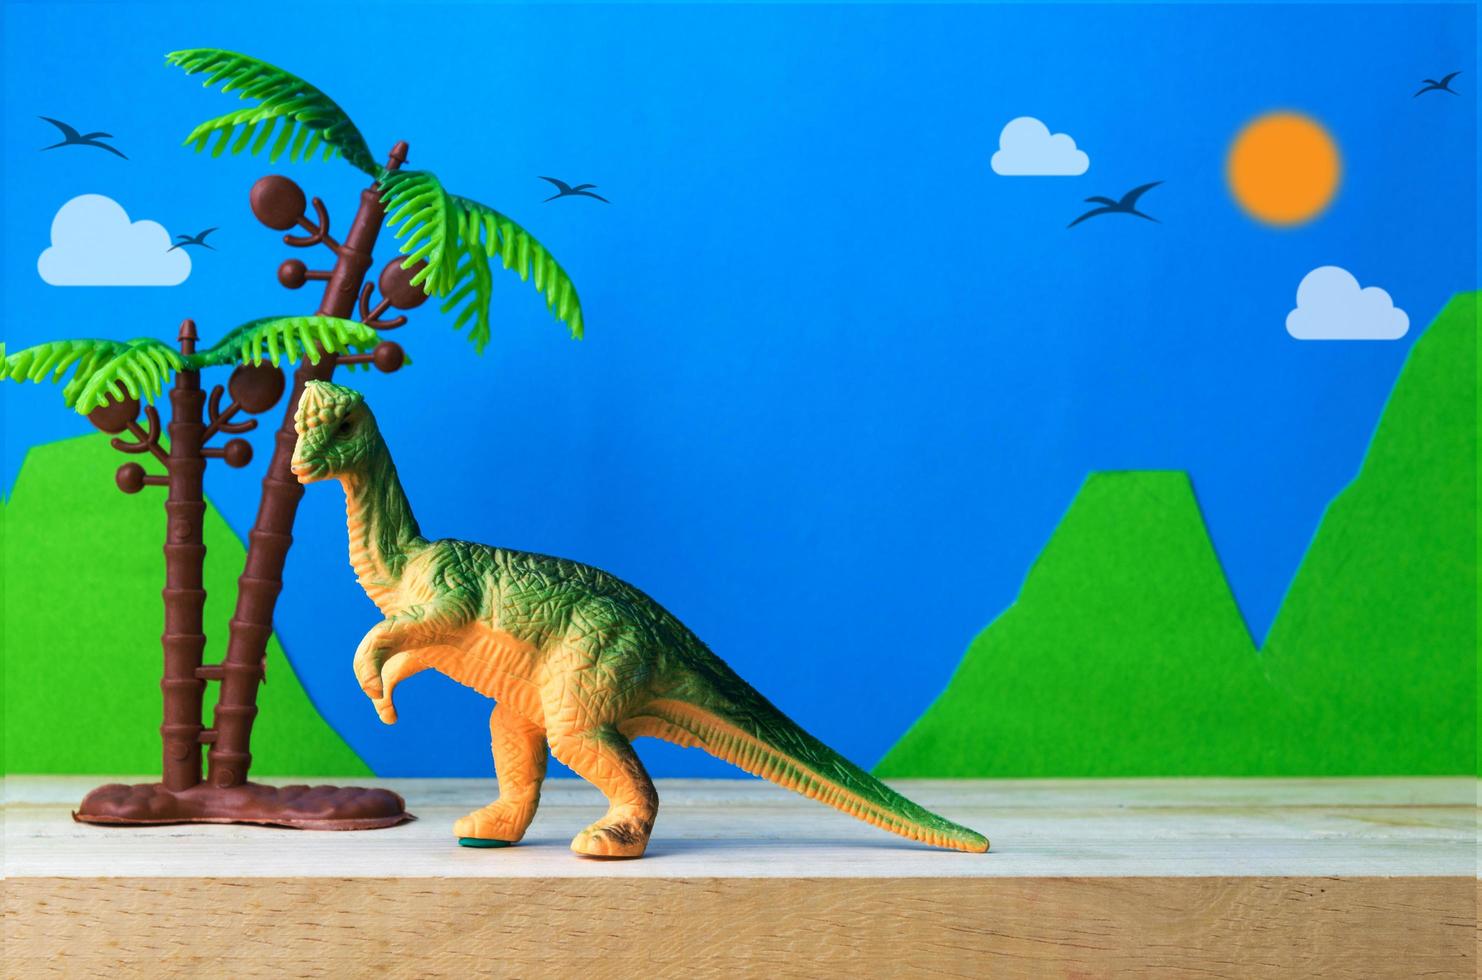 Pachycephalosaurus dinosaur toy model on wild models background photo